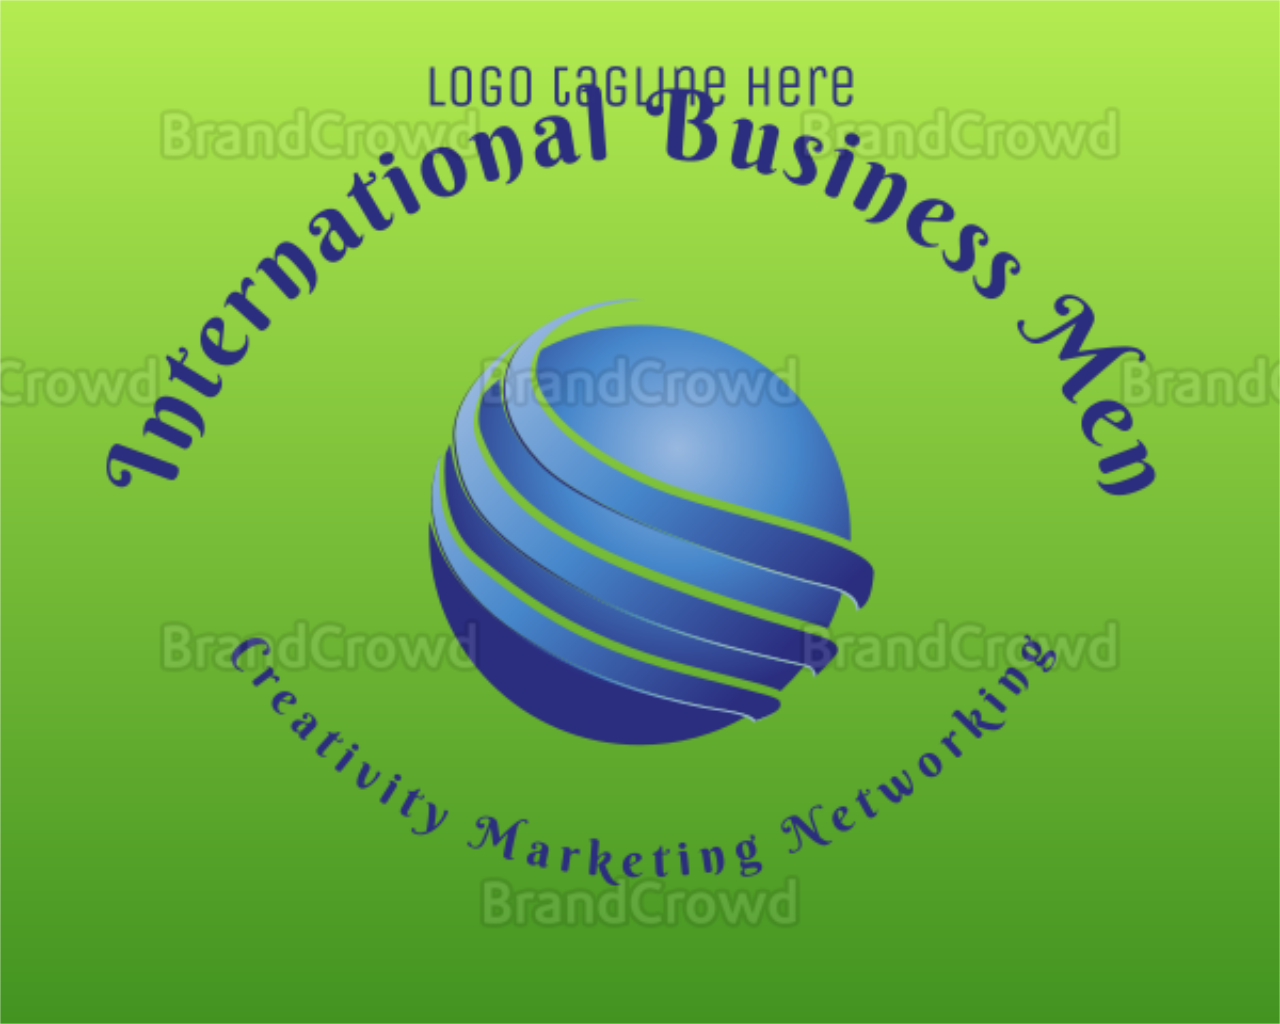 International Business Men's logo